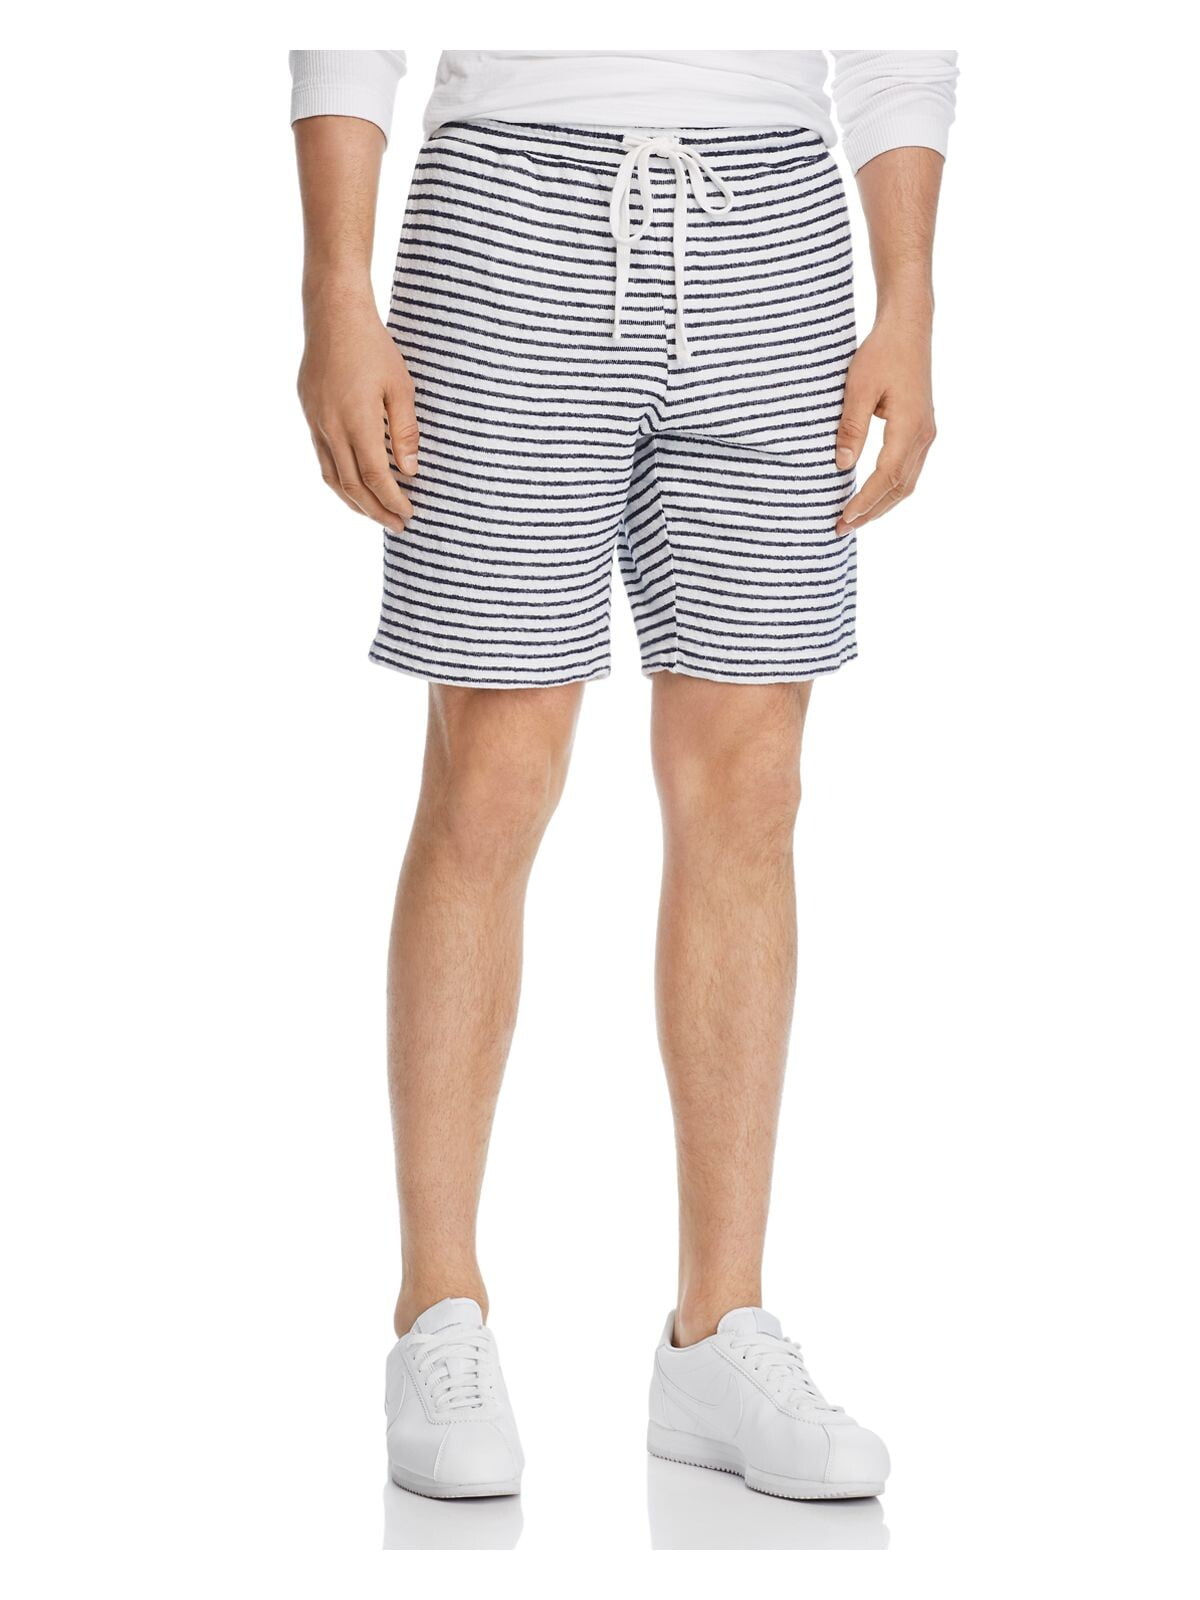 mens striped shorts